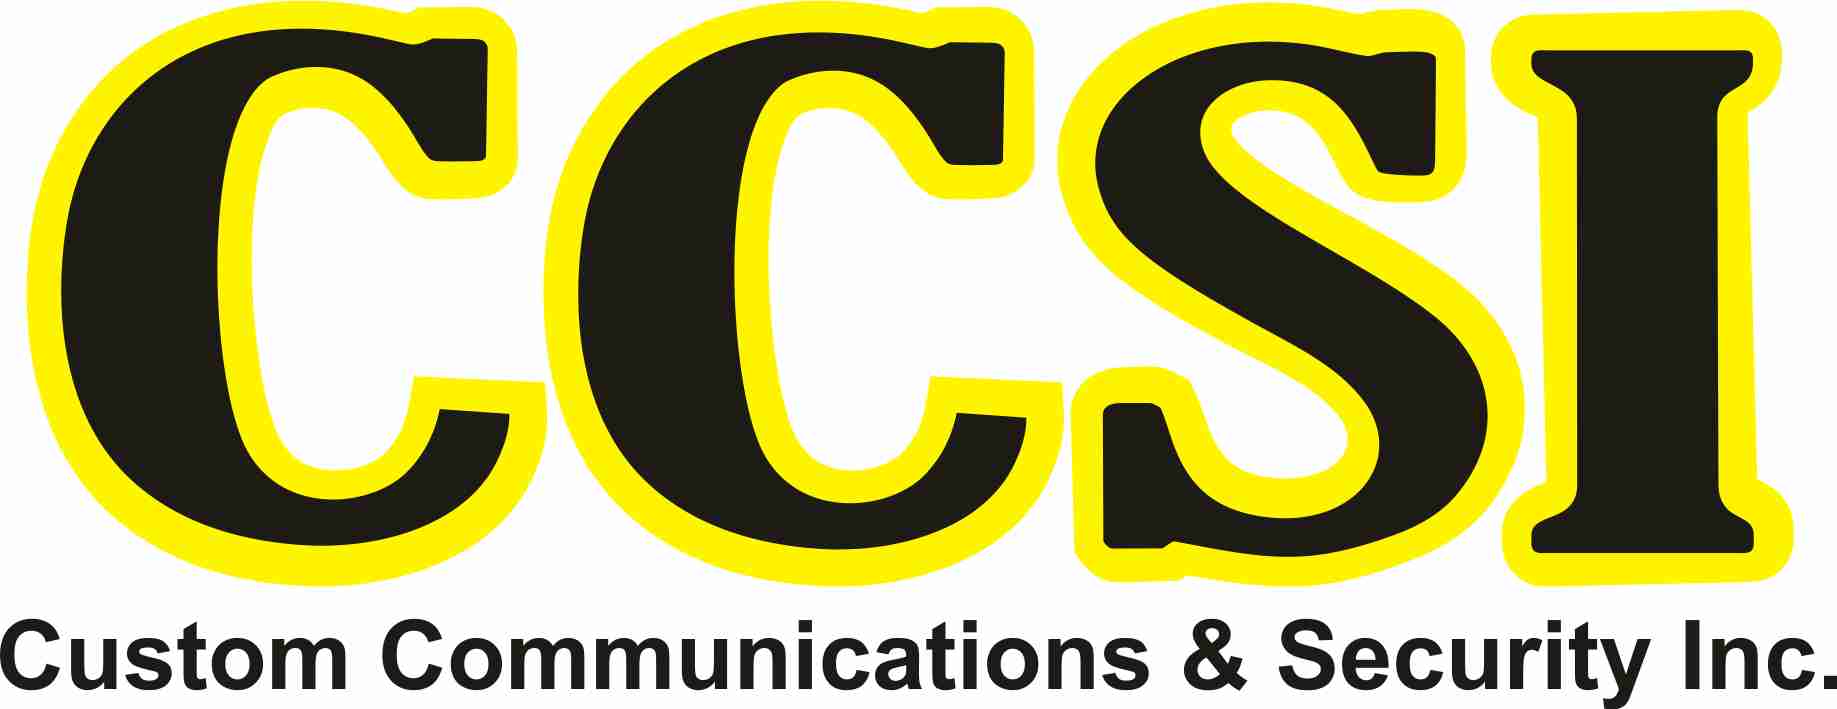 Logo-CCSI